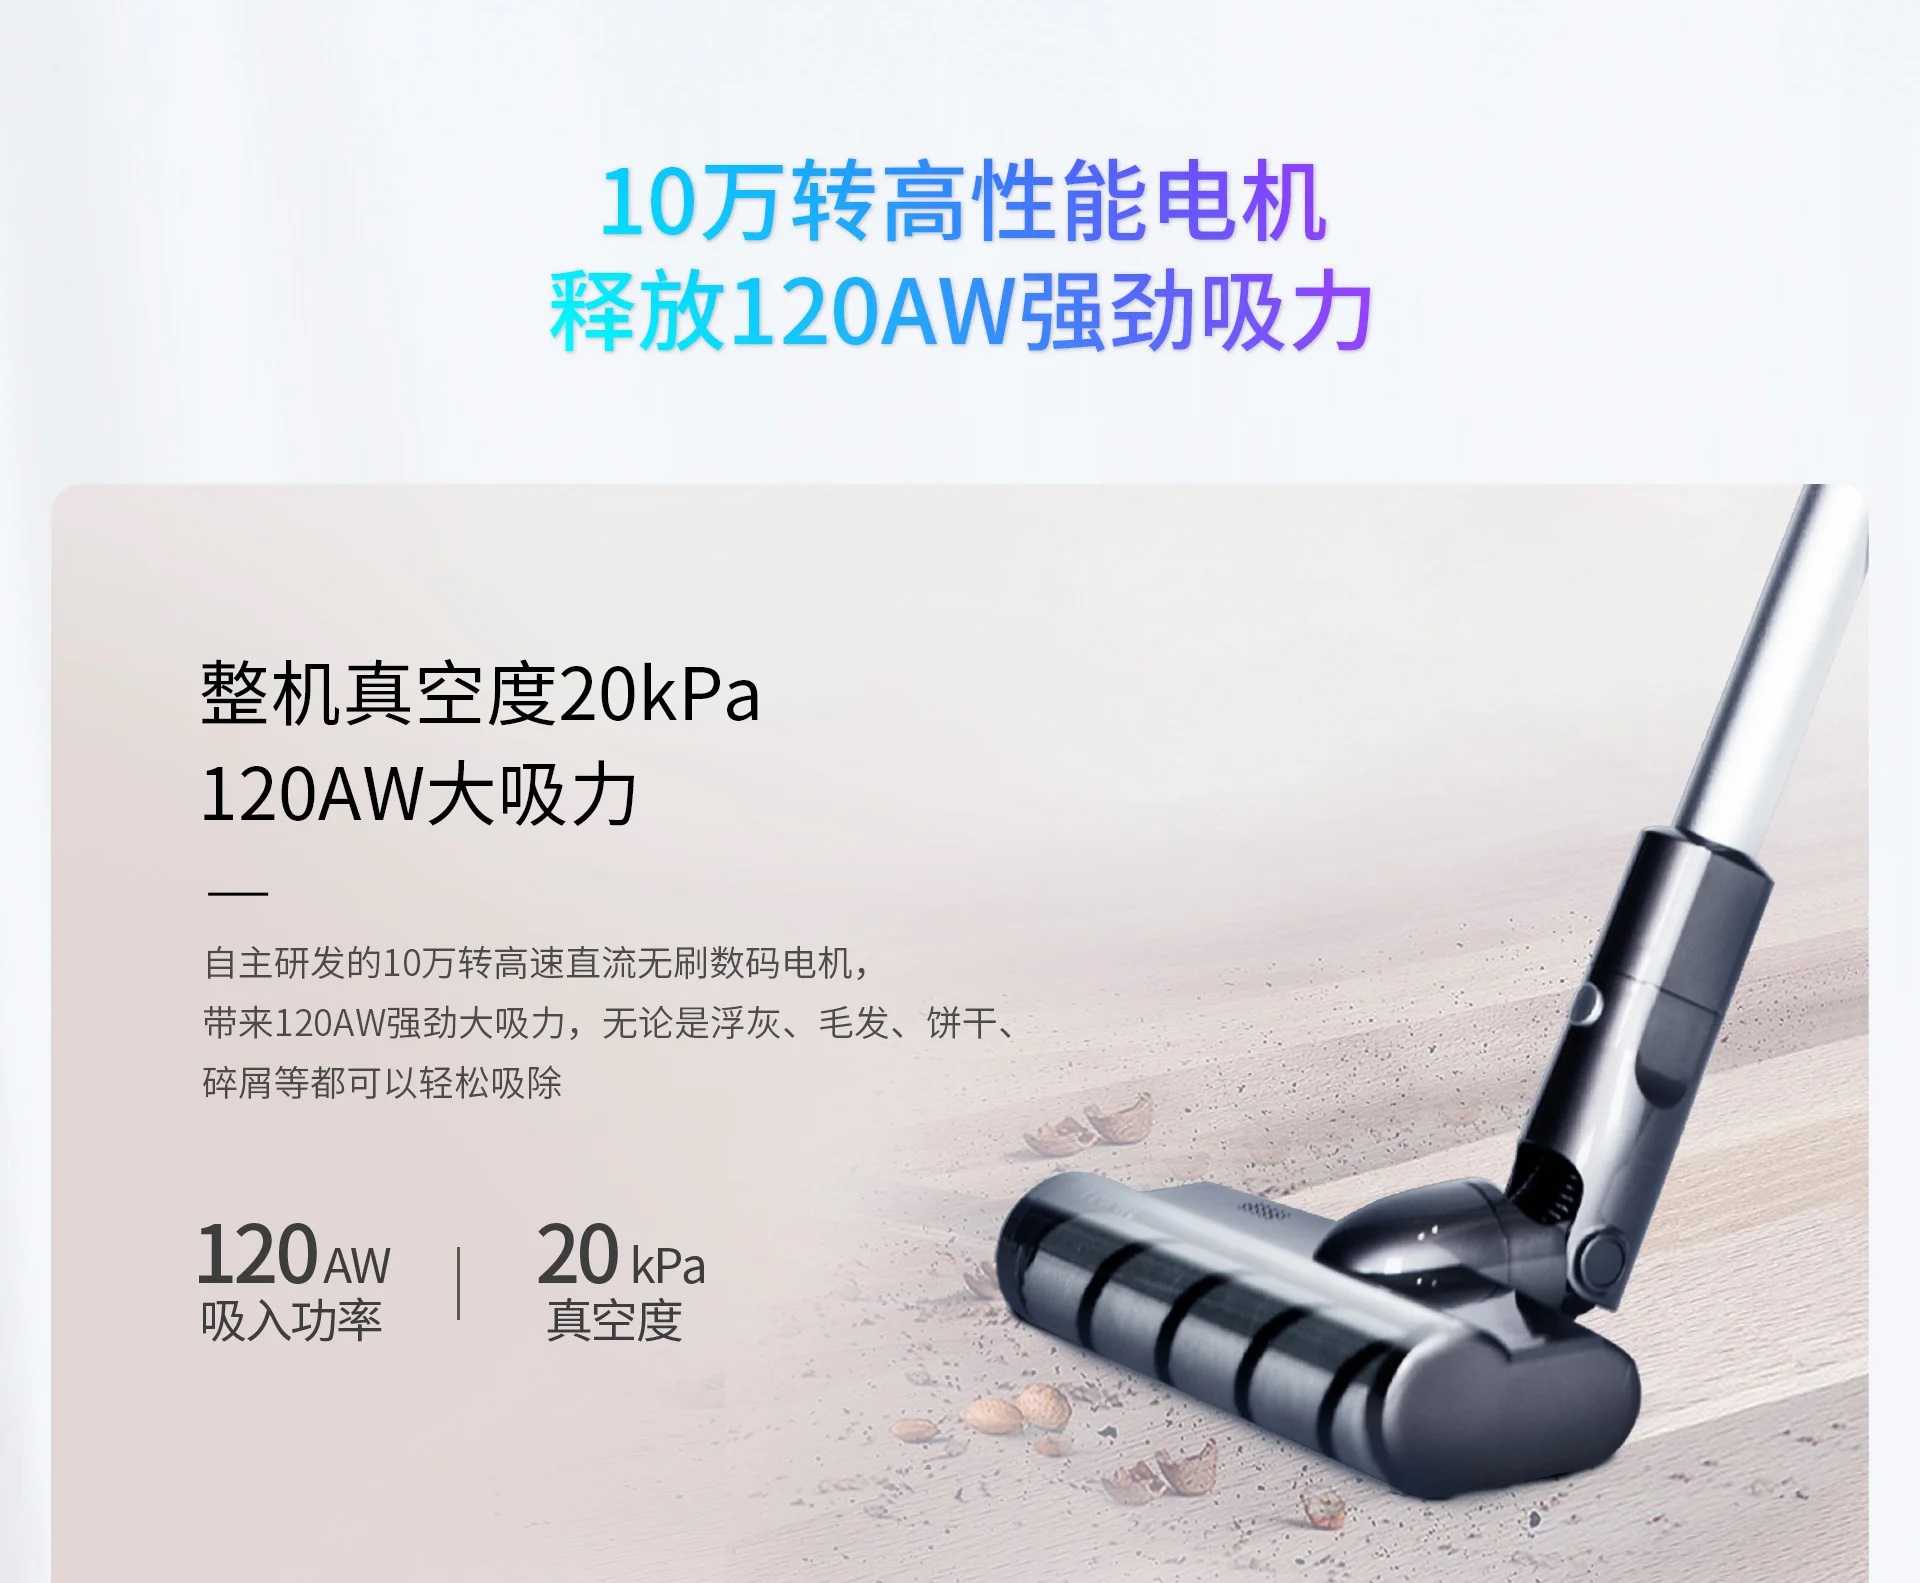 Huawei lancia l'aspirapolvere wireless Jimmy Smart 1S in Cina 2